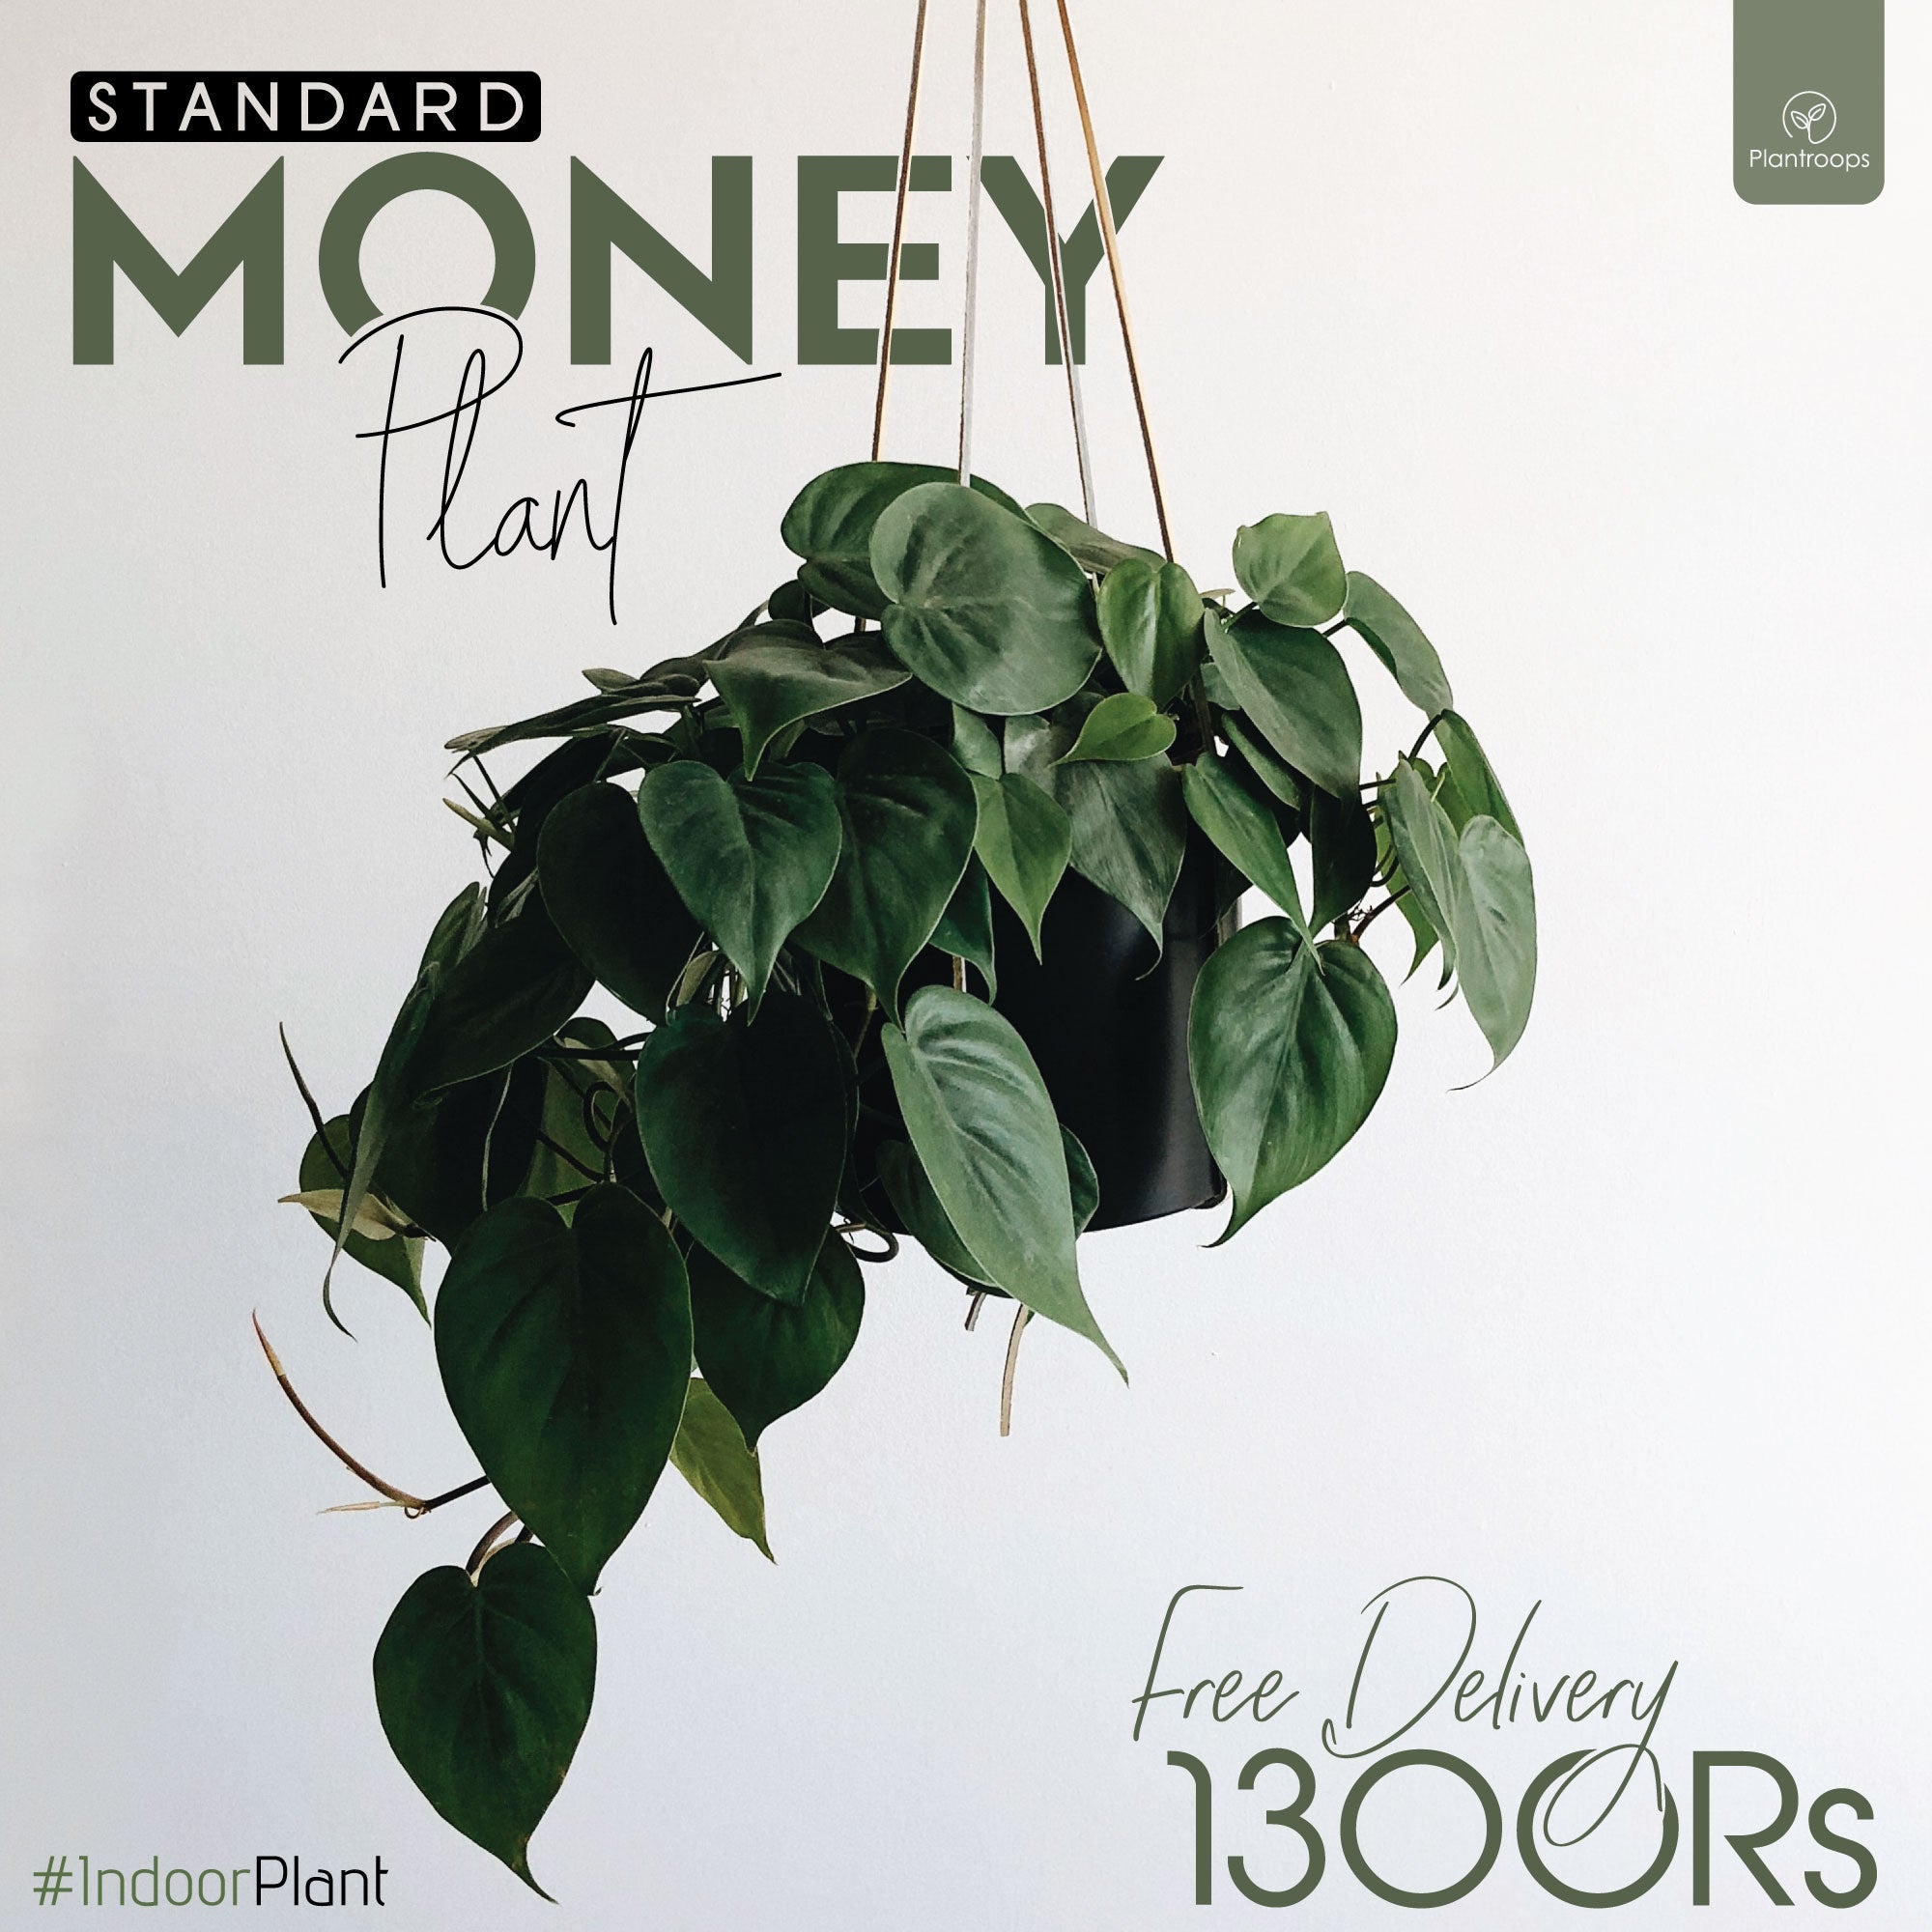 STANDARD MONEY PLANT